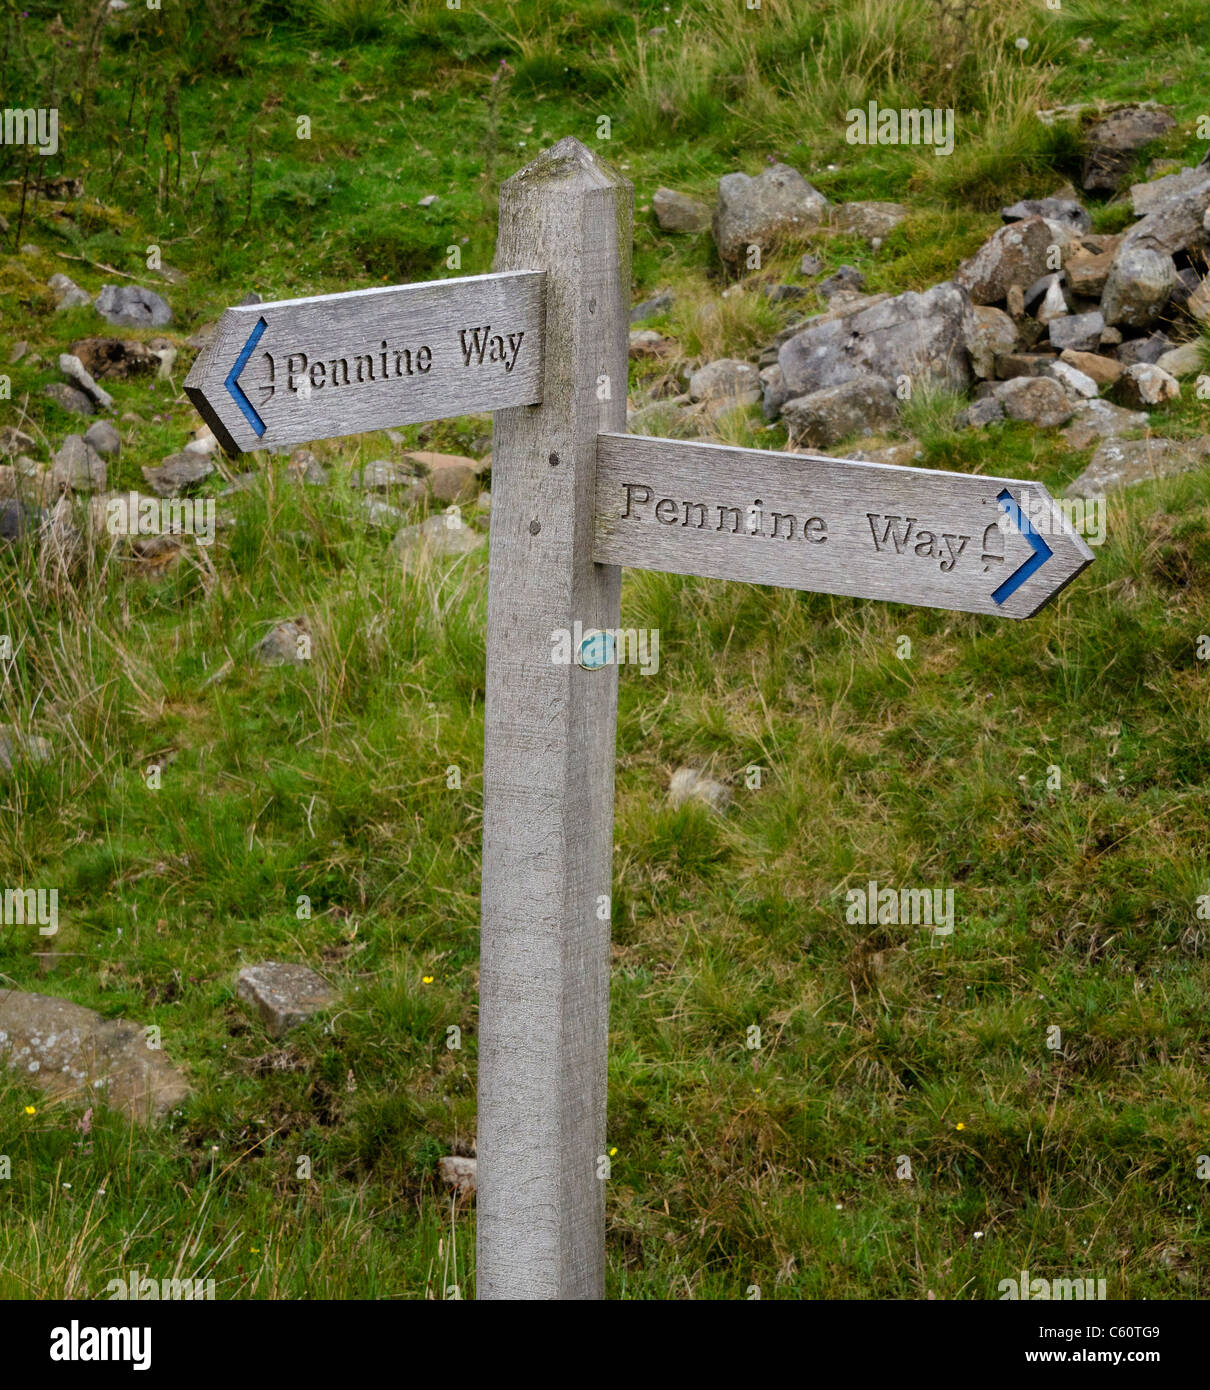 Pennine Way Signpost Banque D'Images